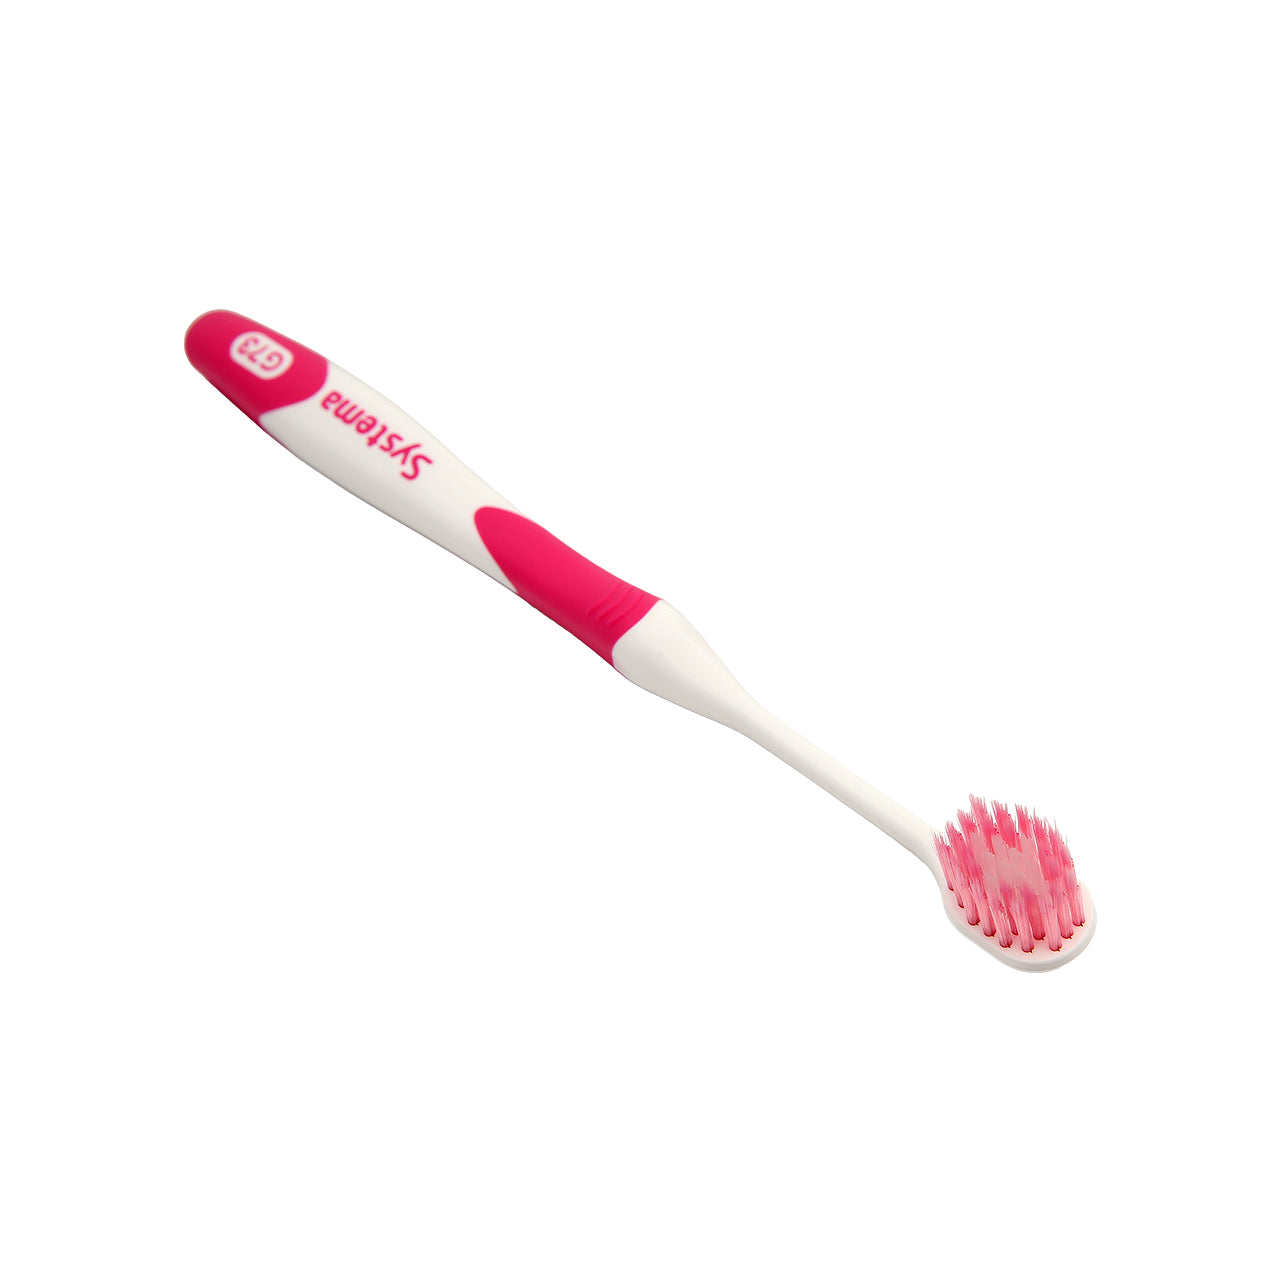 Lion Systema Wide High Density Toothbrush G73 Soft 1pc | Sasa Global eShop